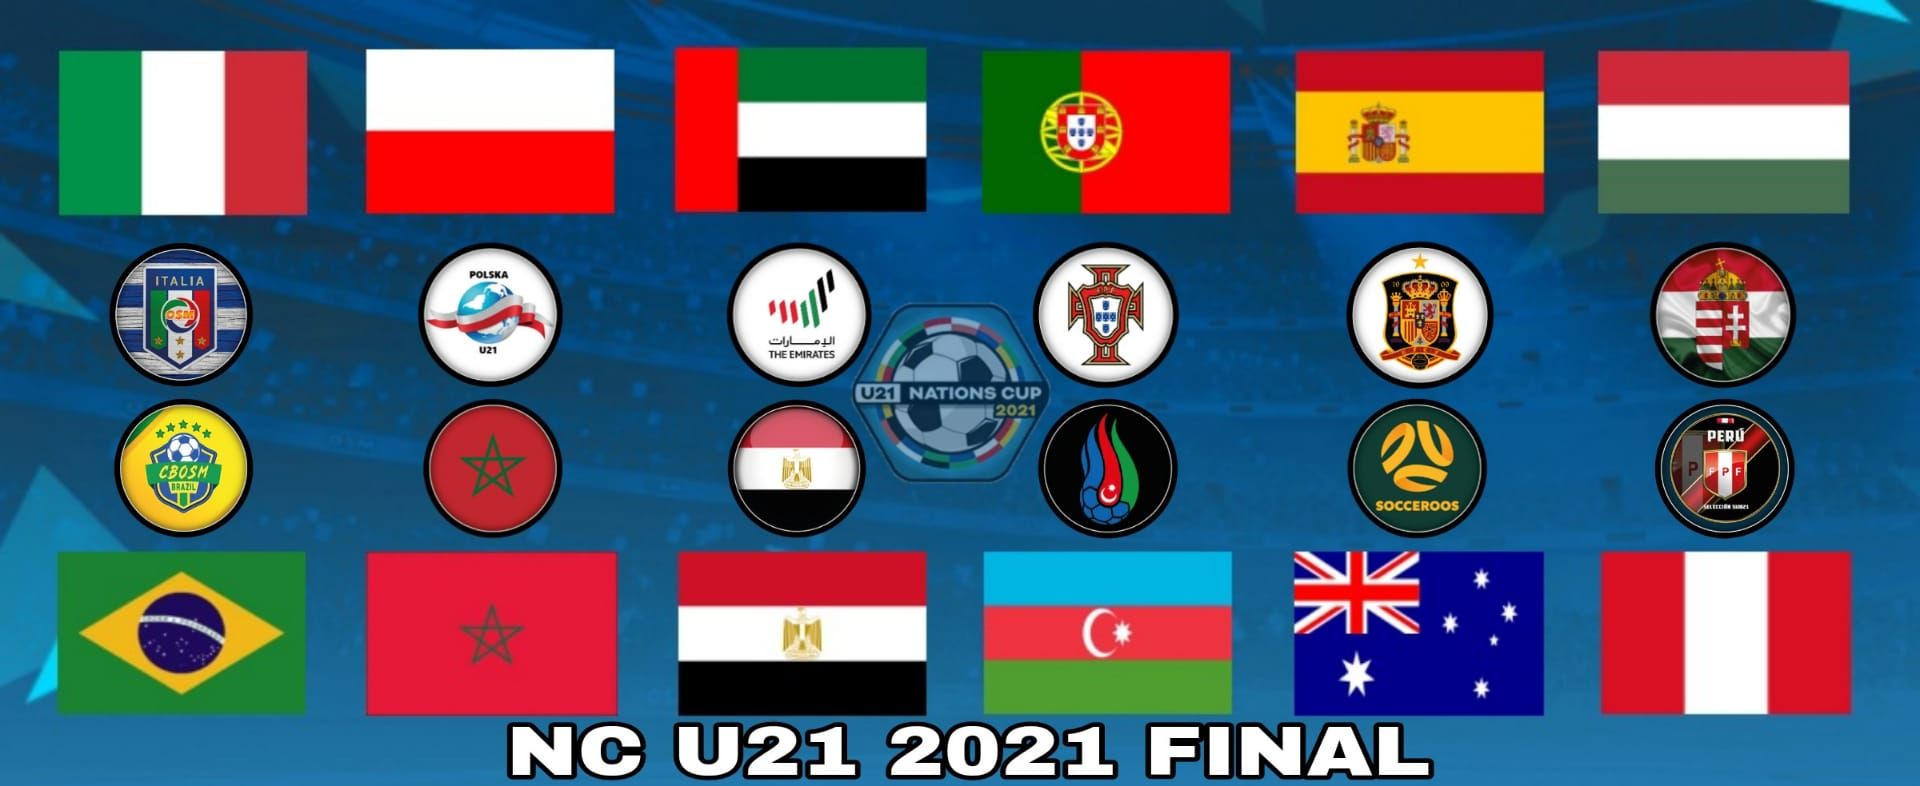 NC U21 Final.jpeg